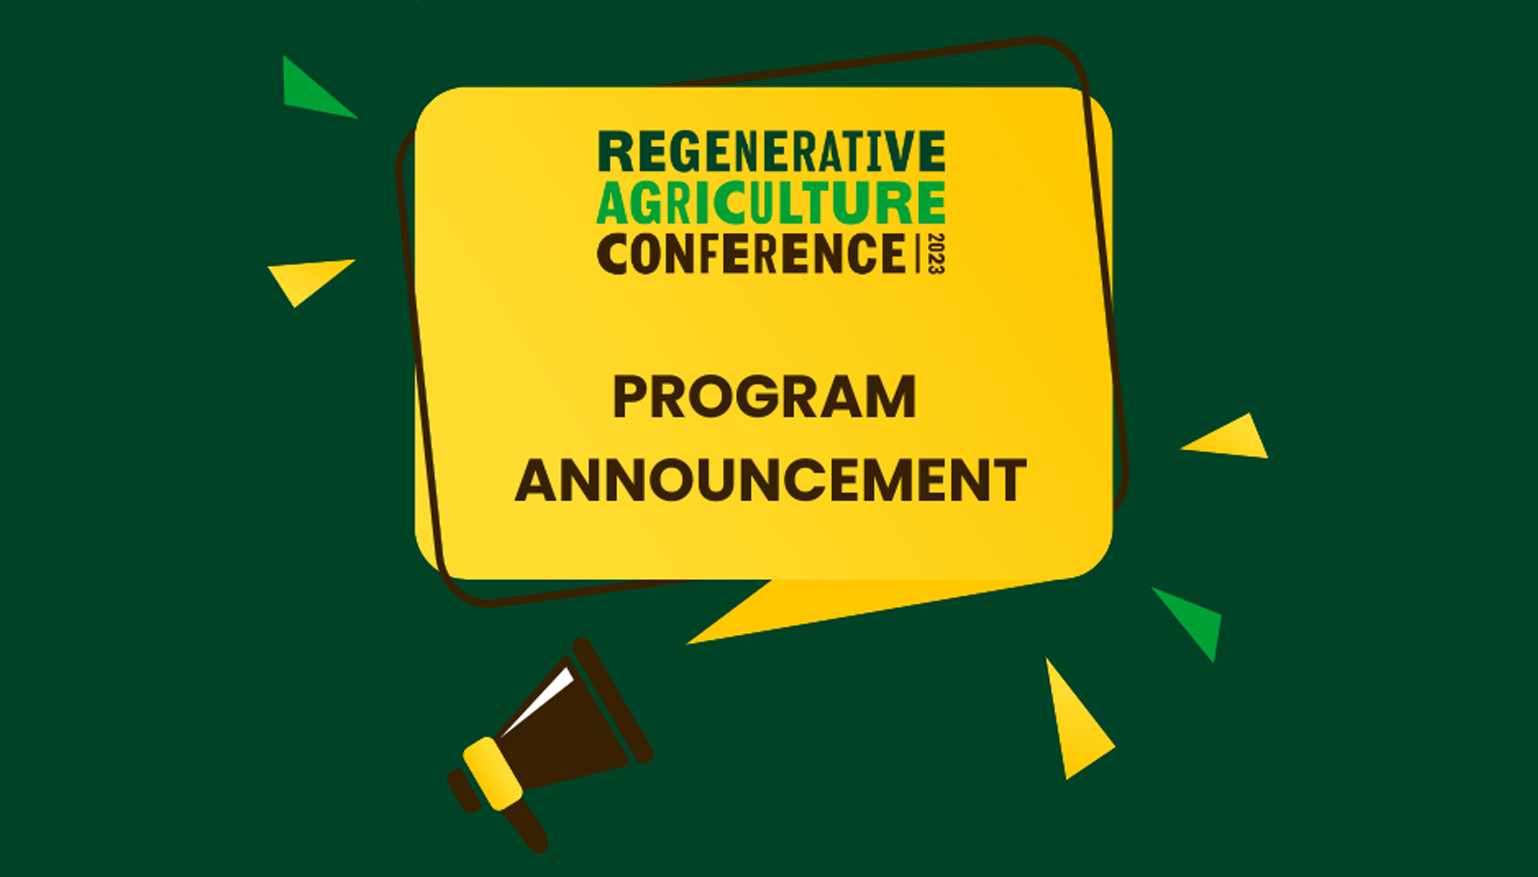 Full Conference Program Released for Regenerative Agriculture Event